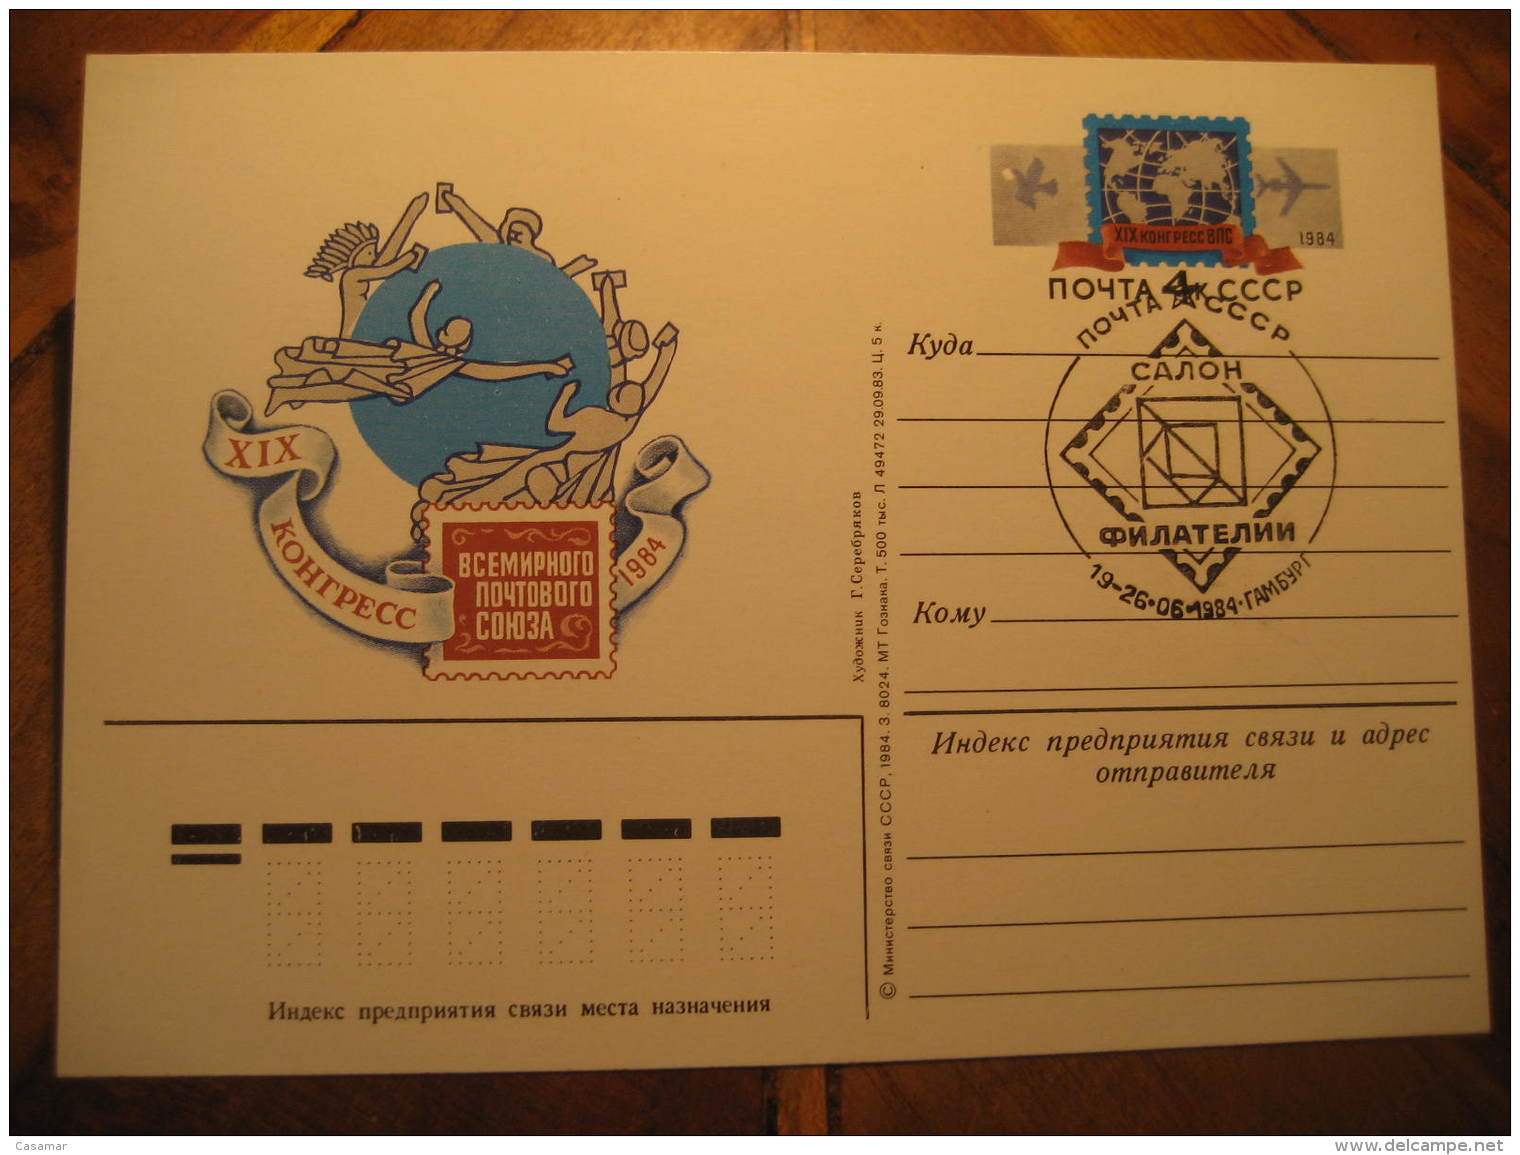 1983 1984 UPU Postal Stationery Card Russia USSR CCCP - UPU (Union Postale Universelle)